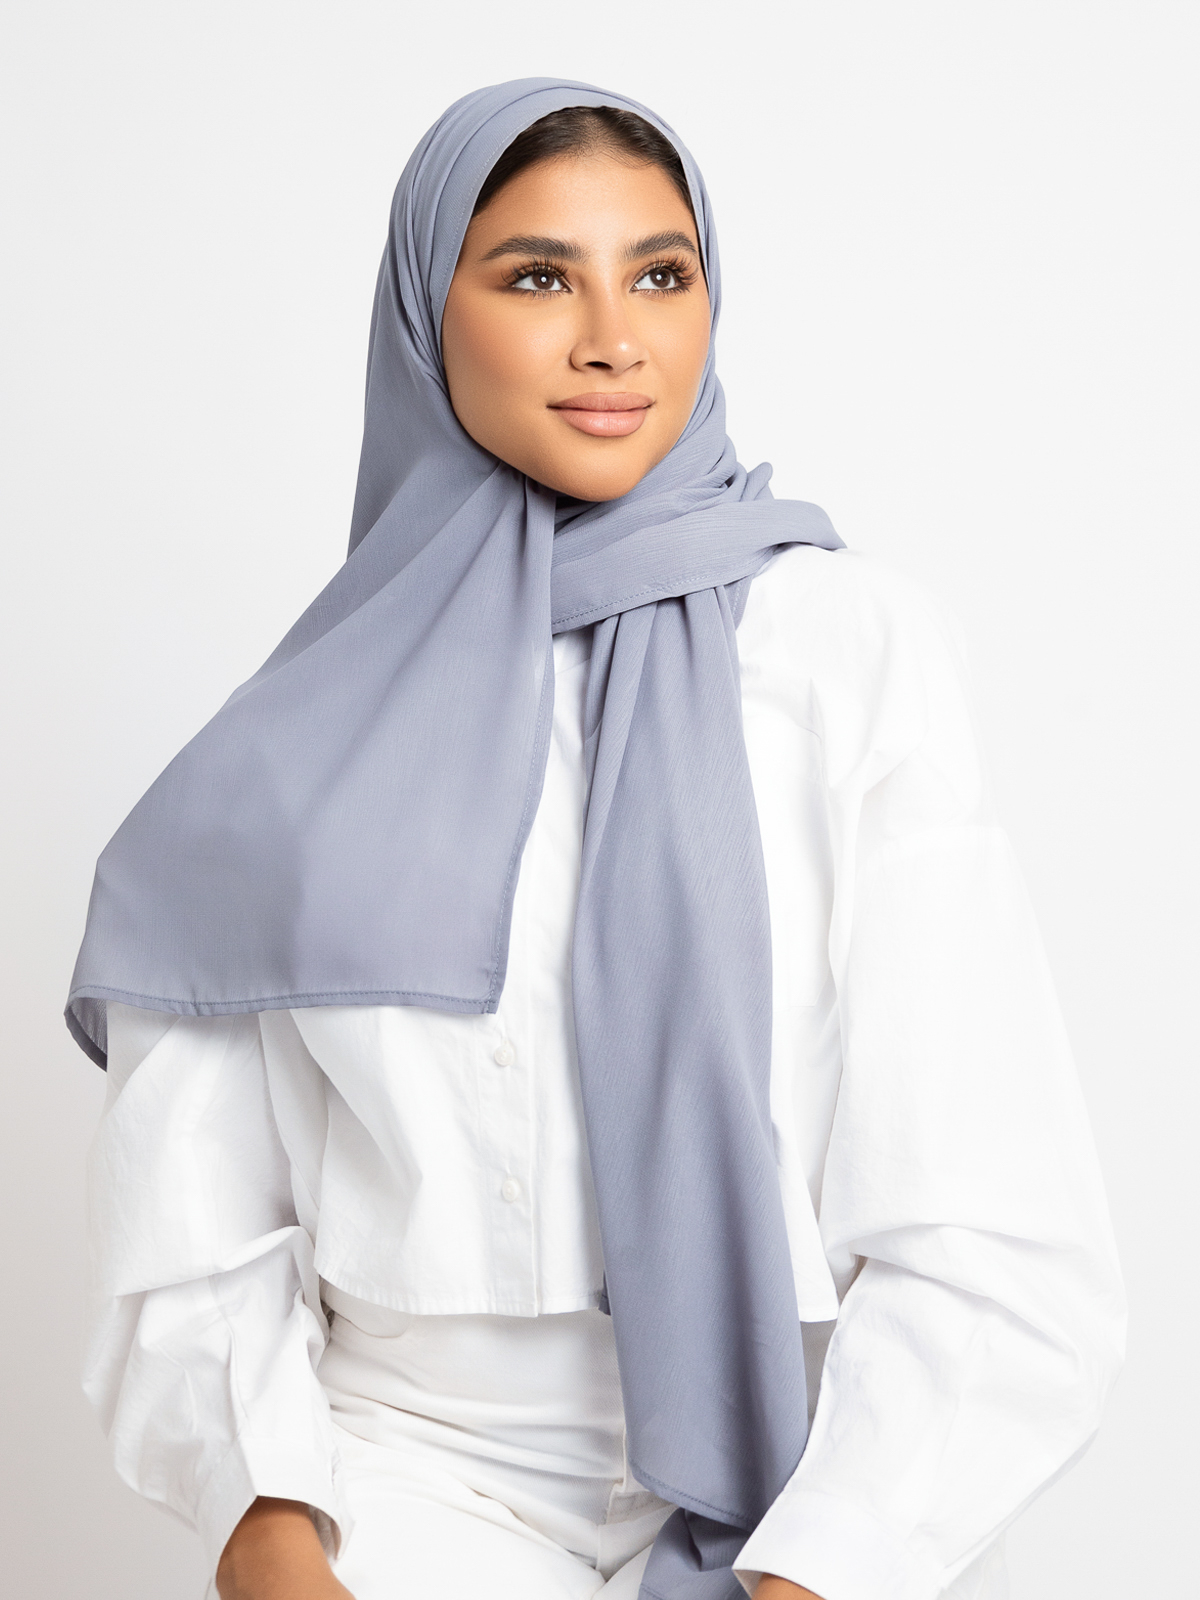 Luxurious chiffon hijab plain tarha 200 cm long blue color high quality material online in ksa by kaafmeem